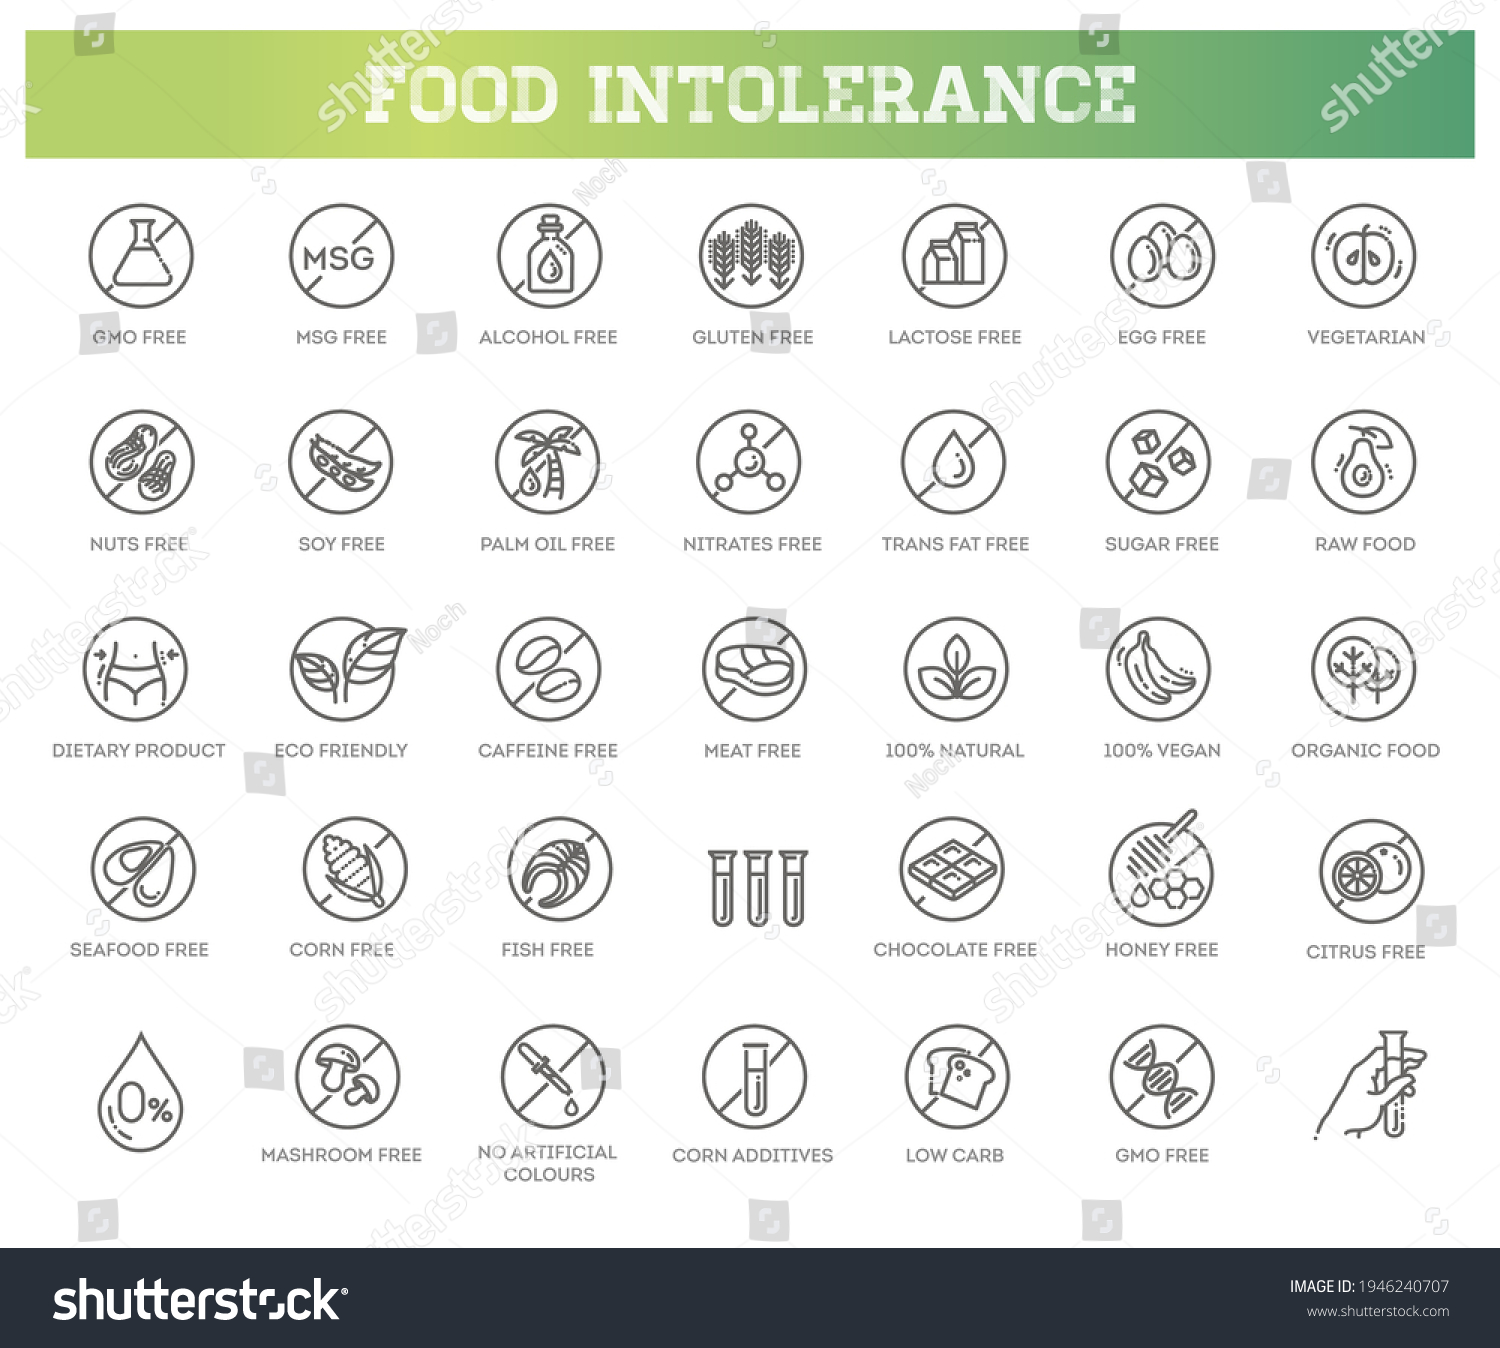 SVG of Allergen ingredients vector icons. Product free allergen ingredient symbols svg